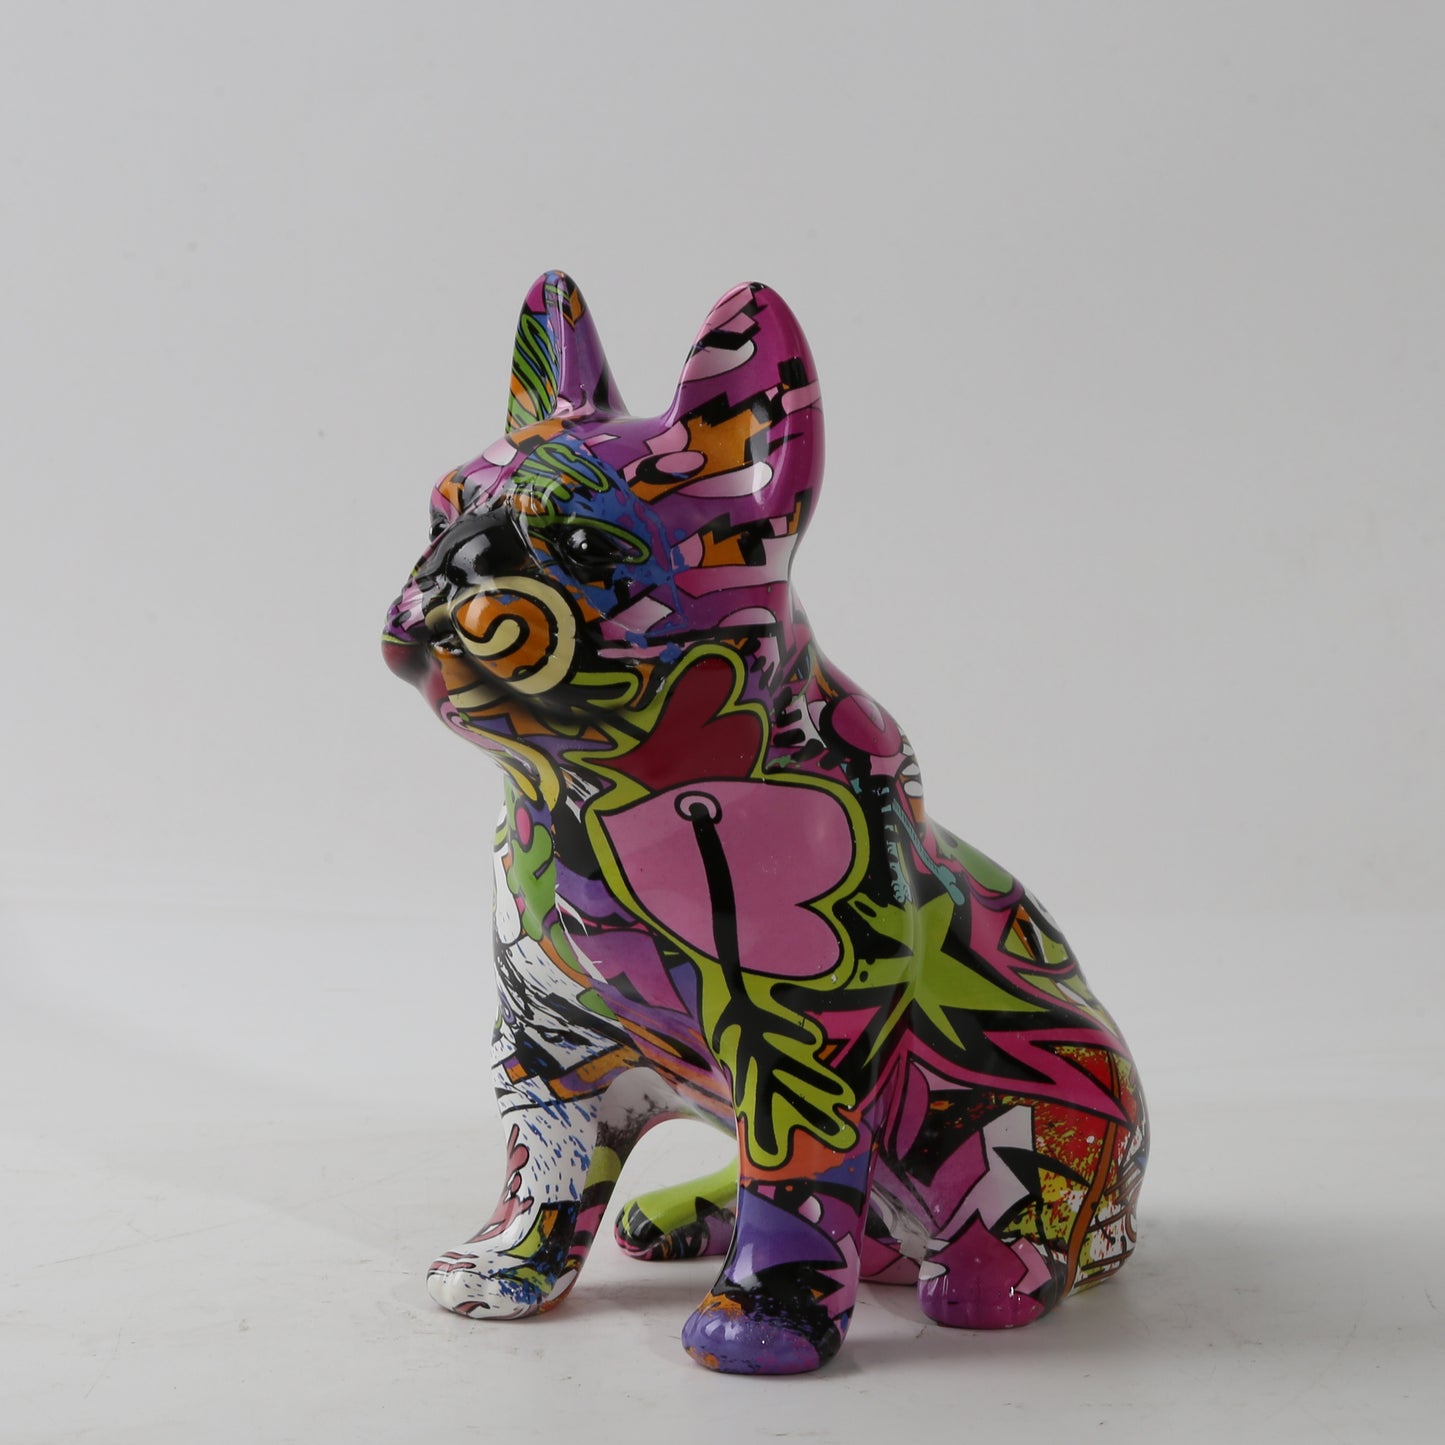 CORX Designs - Graffiti Bulldog Dog Resin Statue - Review